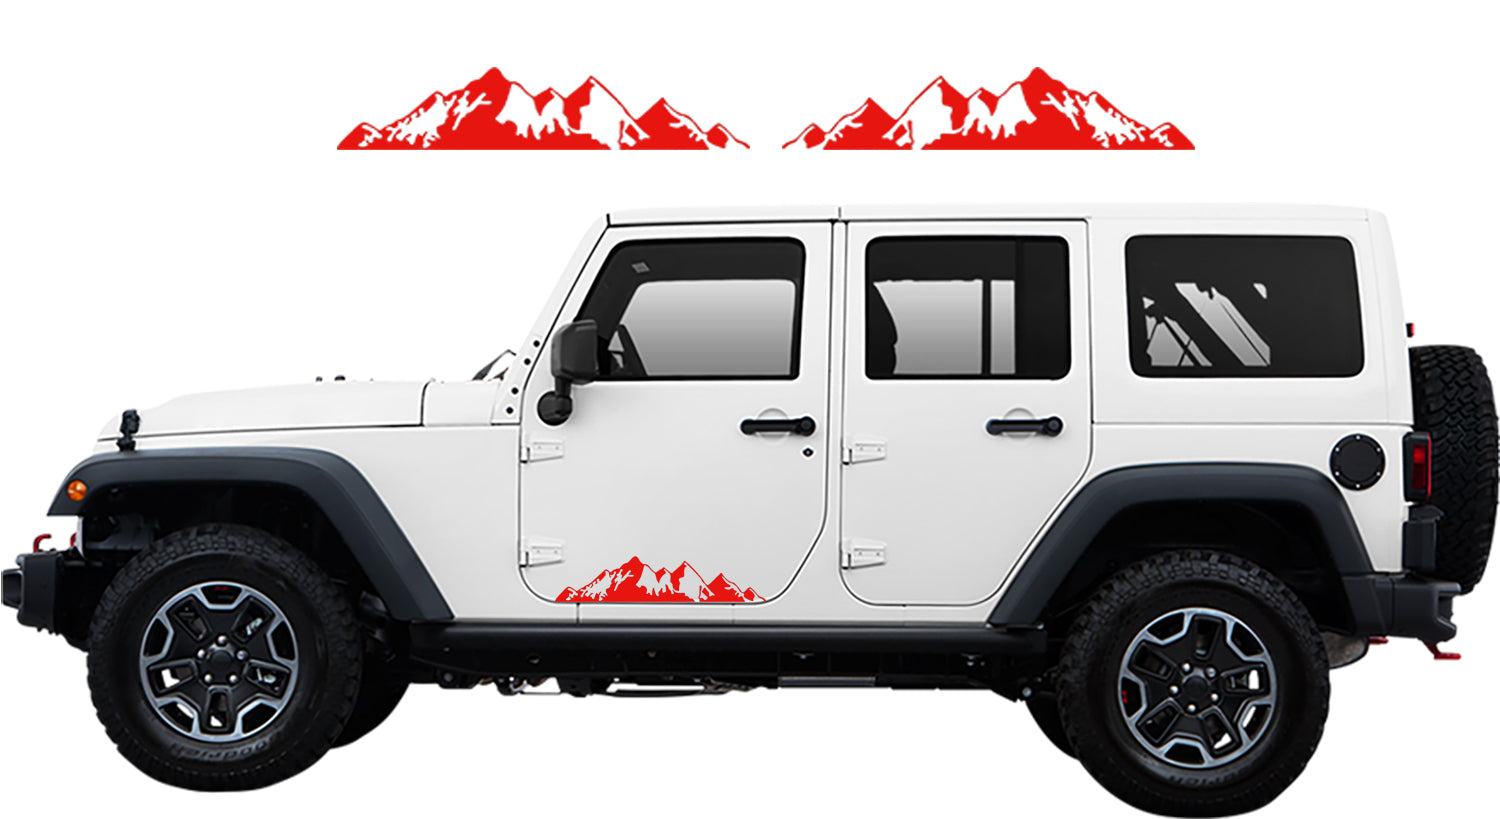 Jeep Wrangler JK Adventure Mountains Decals (Pair) : Vinyl Graphics Kit fits (2007-2018)